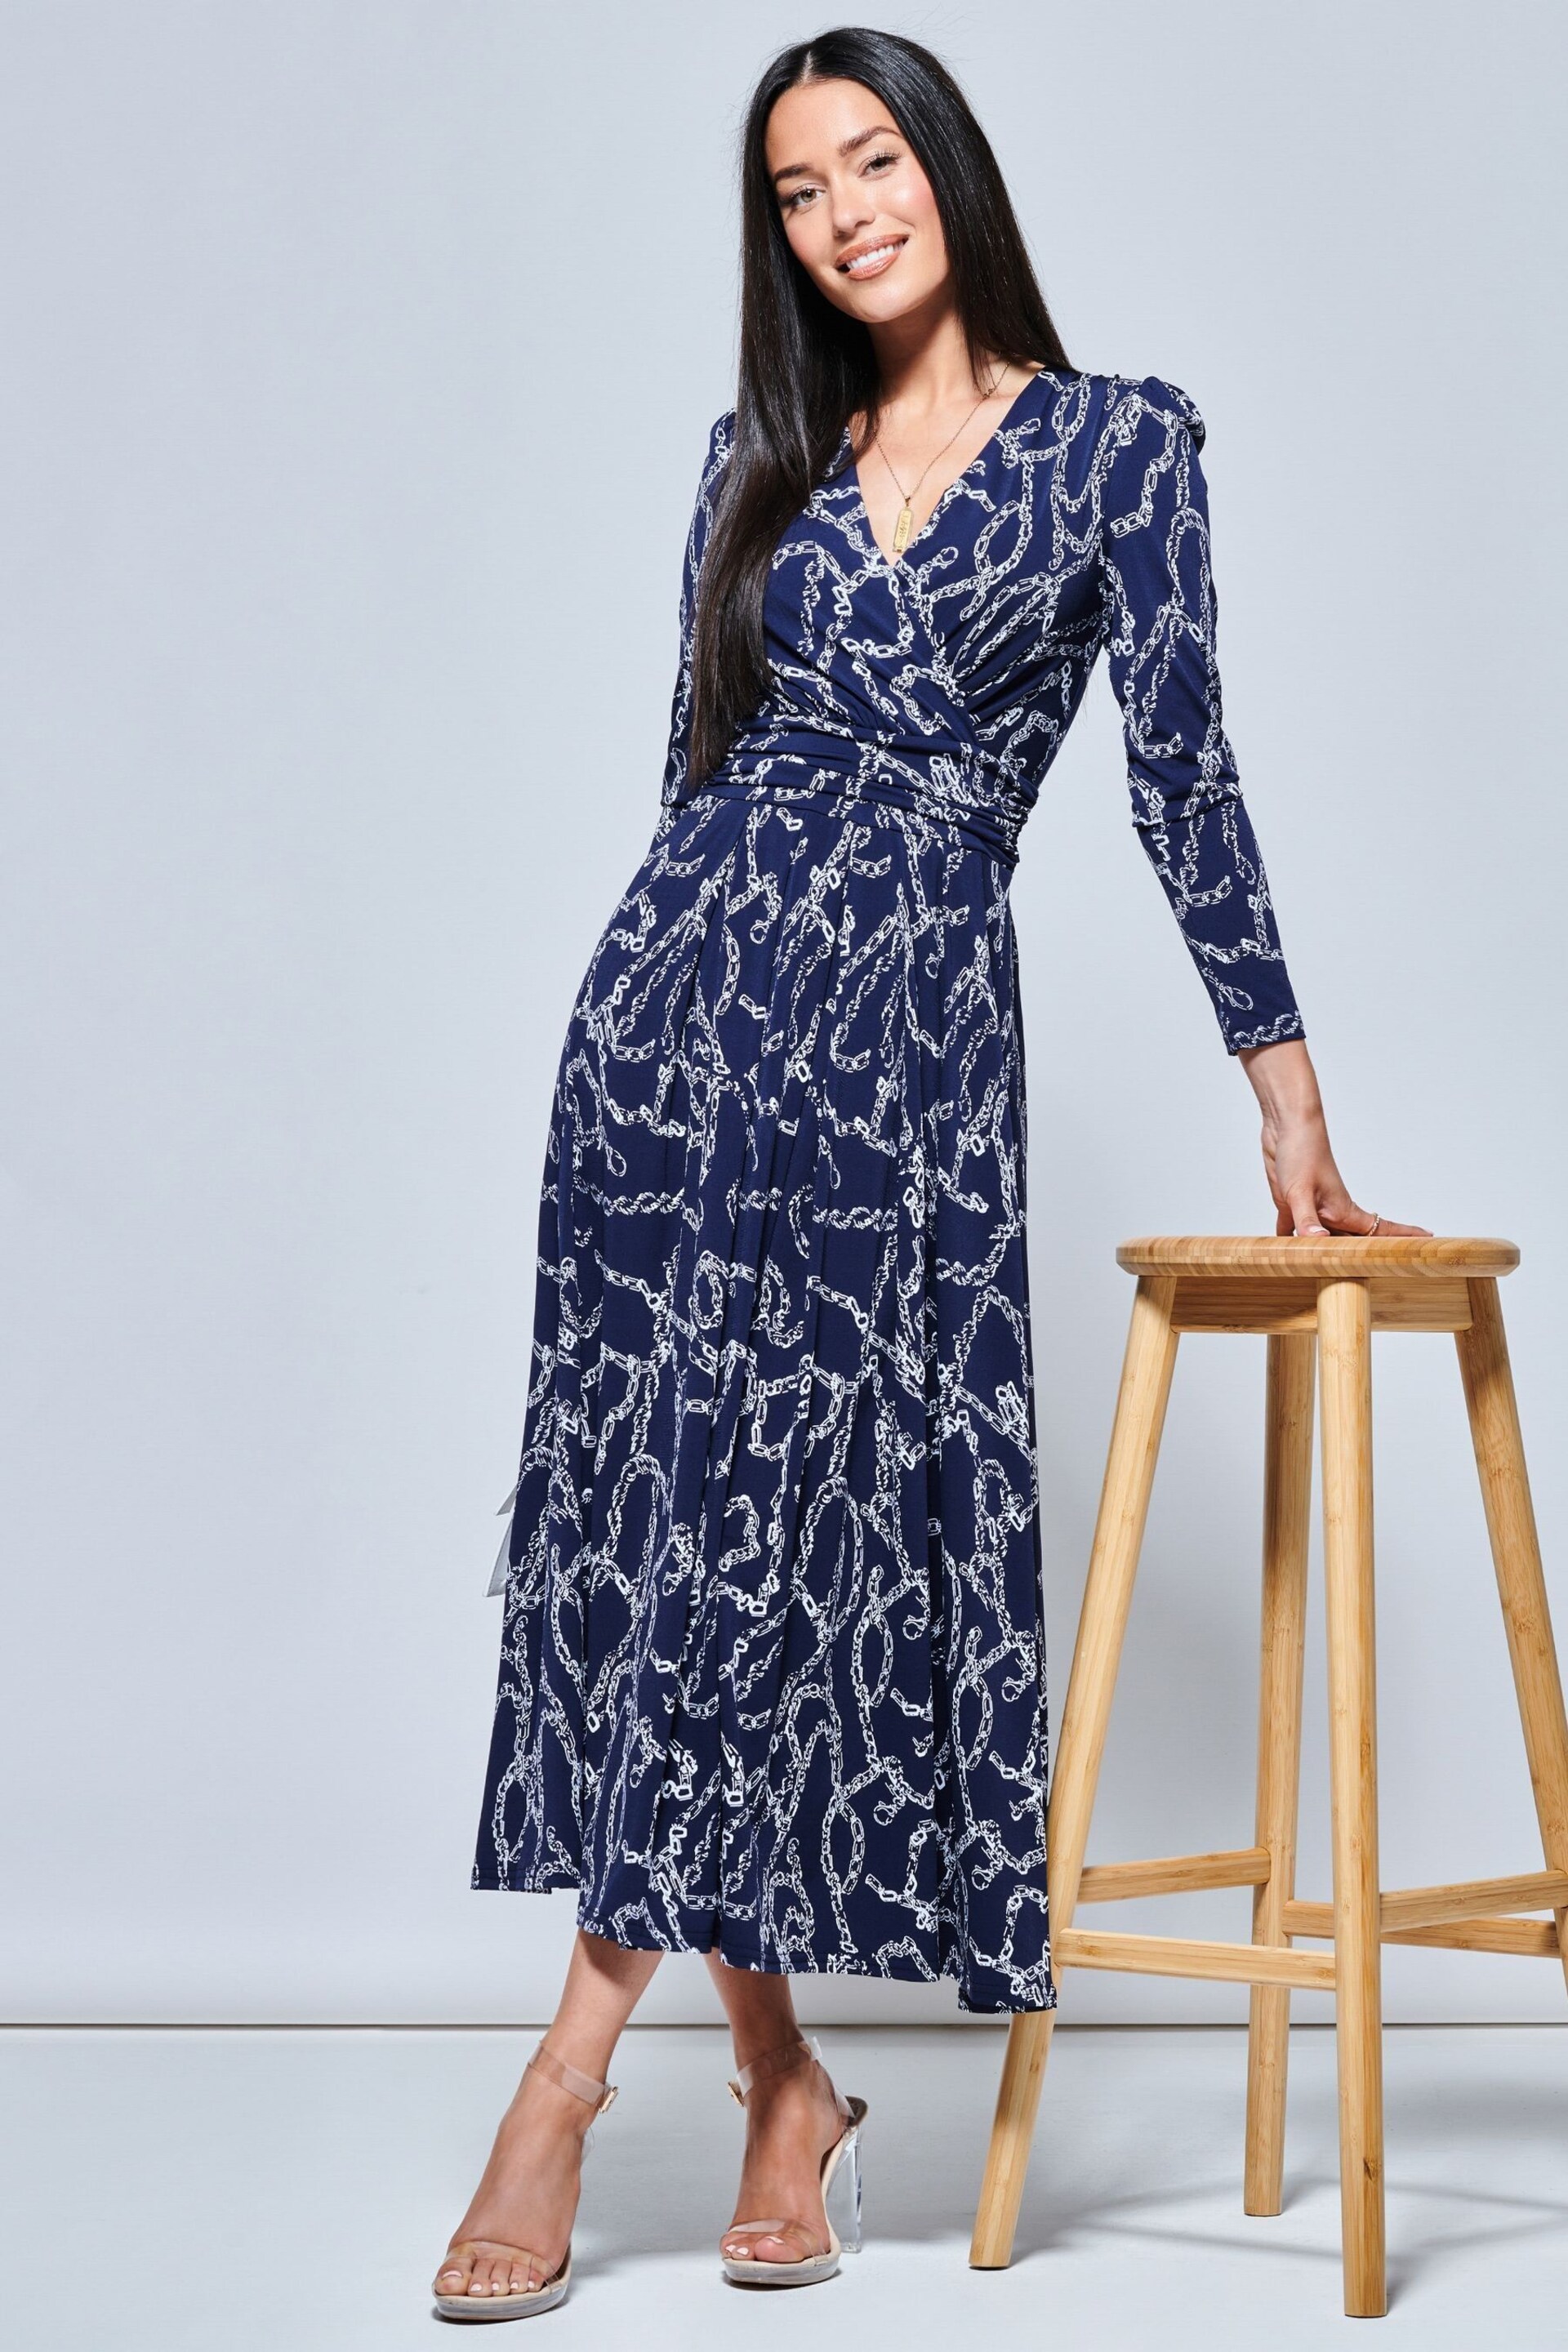 Jolie Moi Blue Chain Print Long Sleeve Maxi Dress - Image 3 of 5